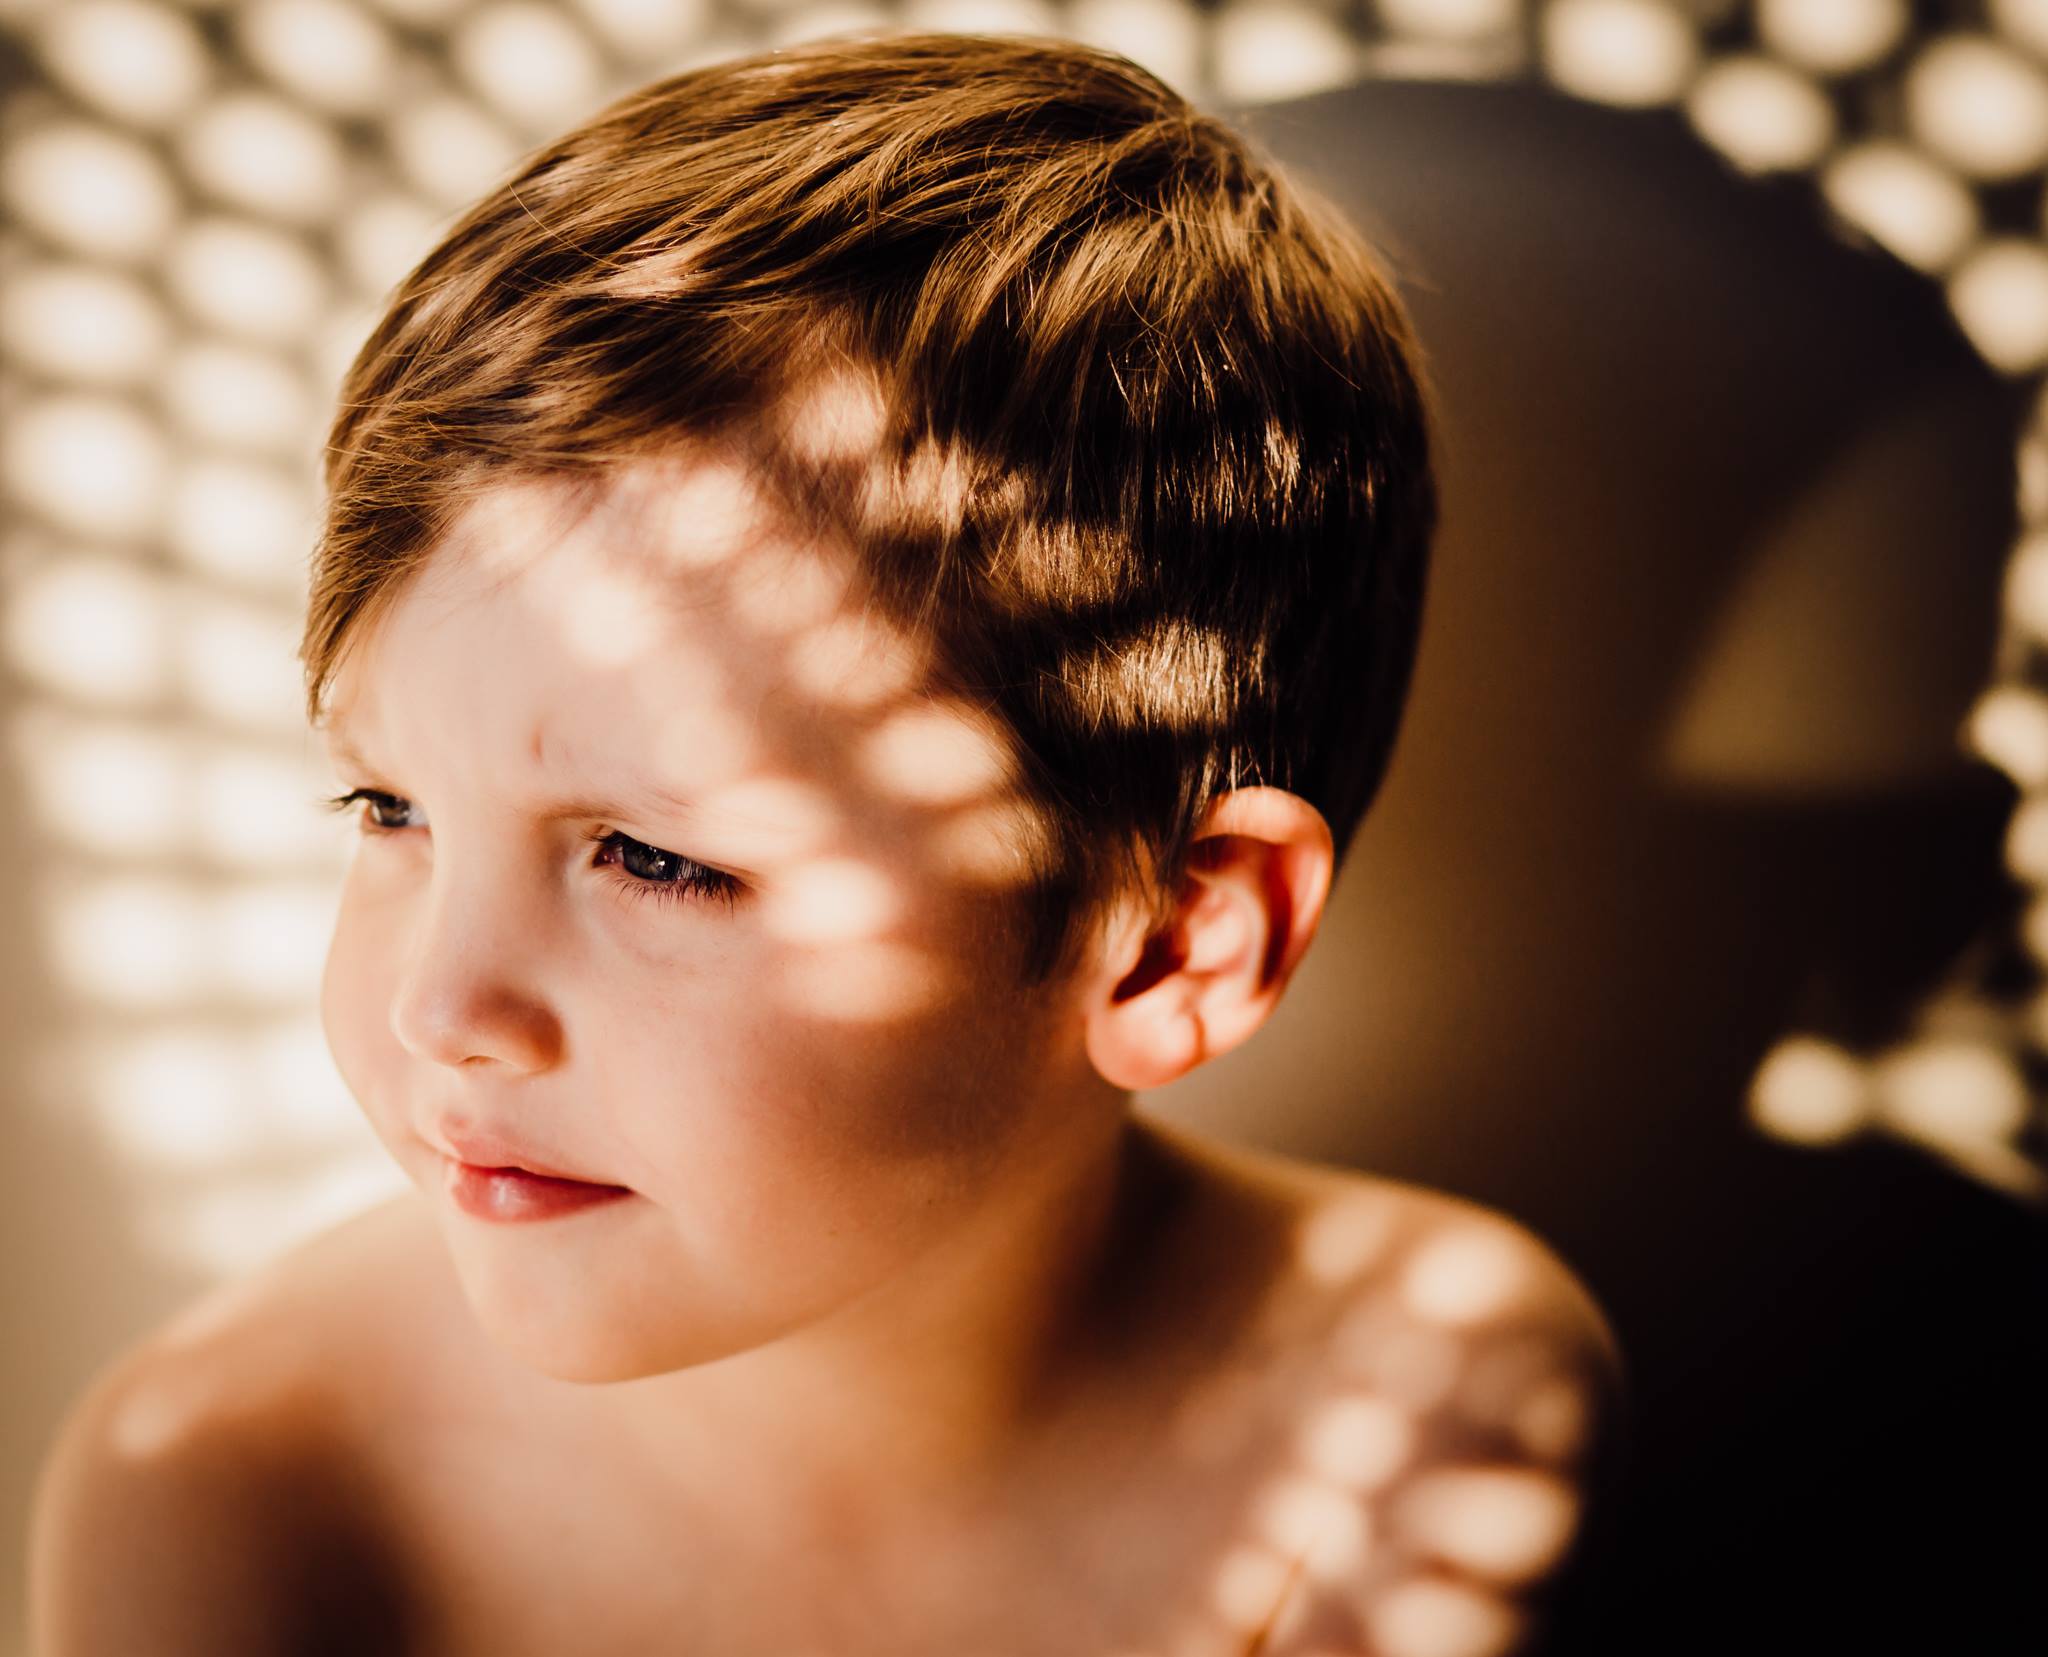 shadow photography portrait of boy